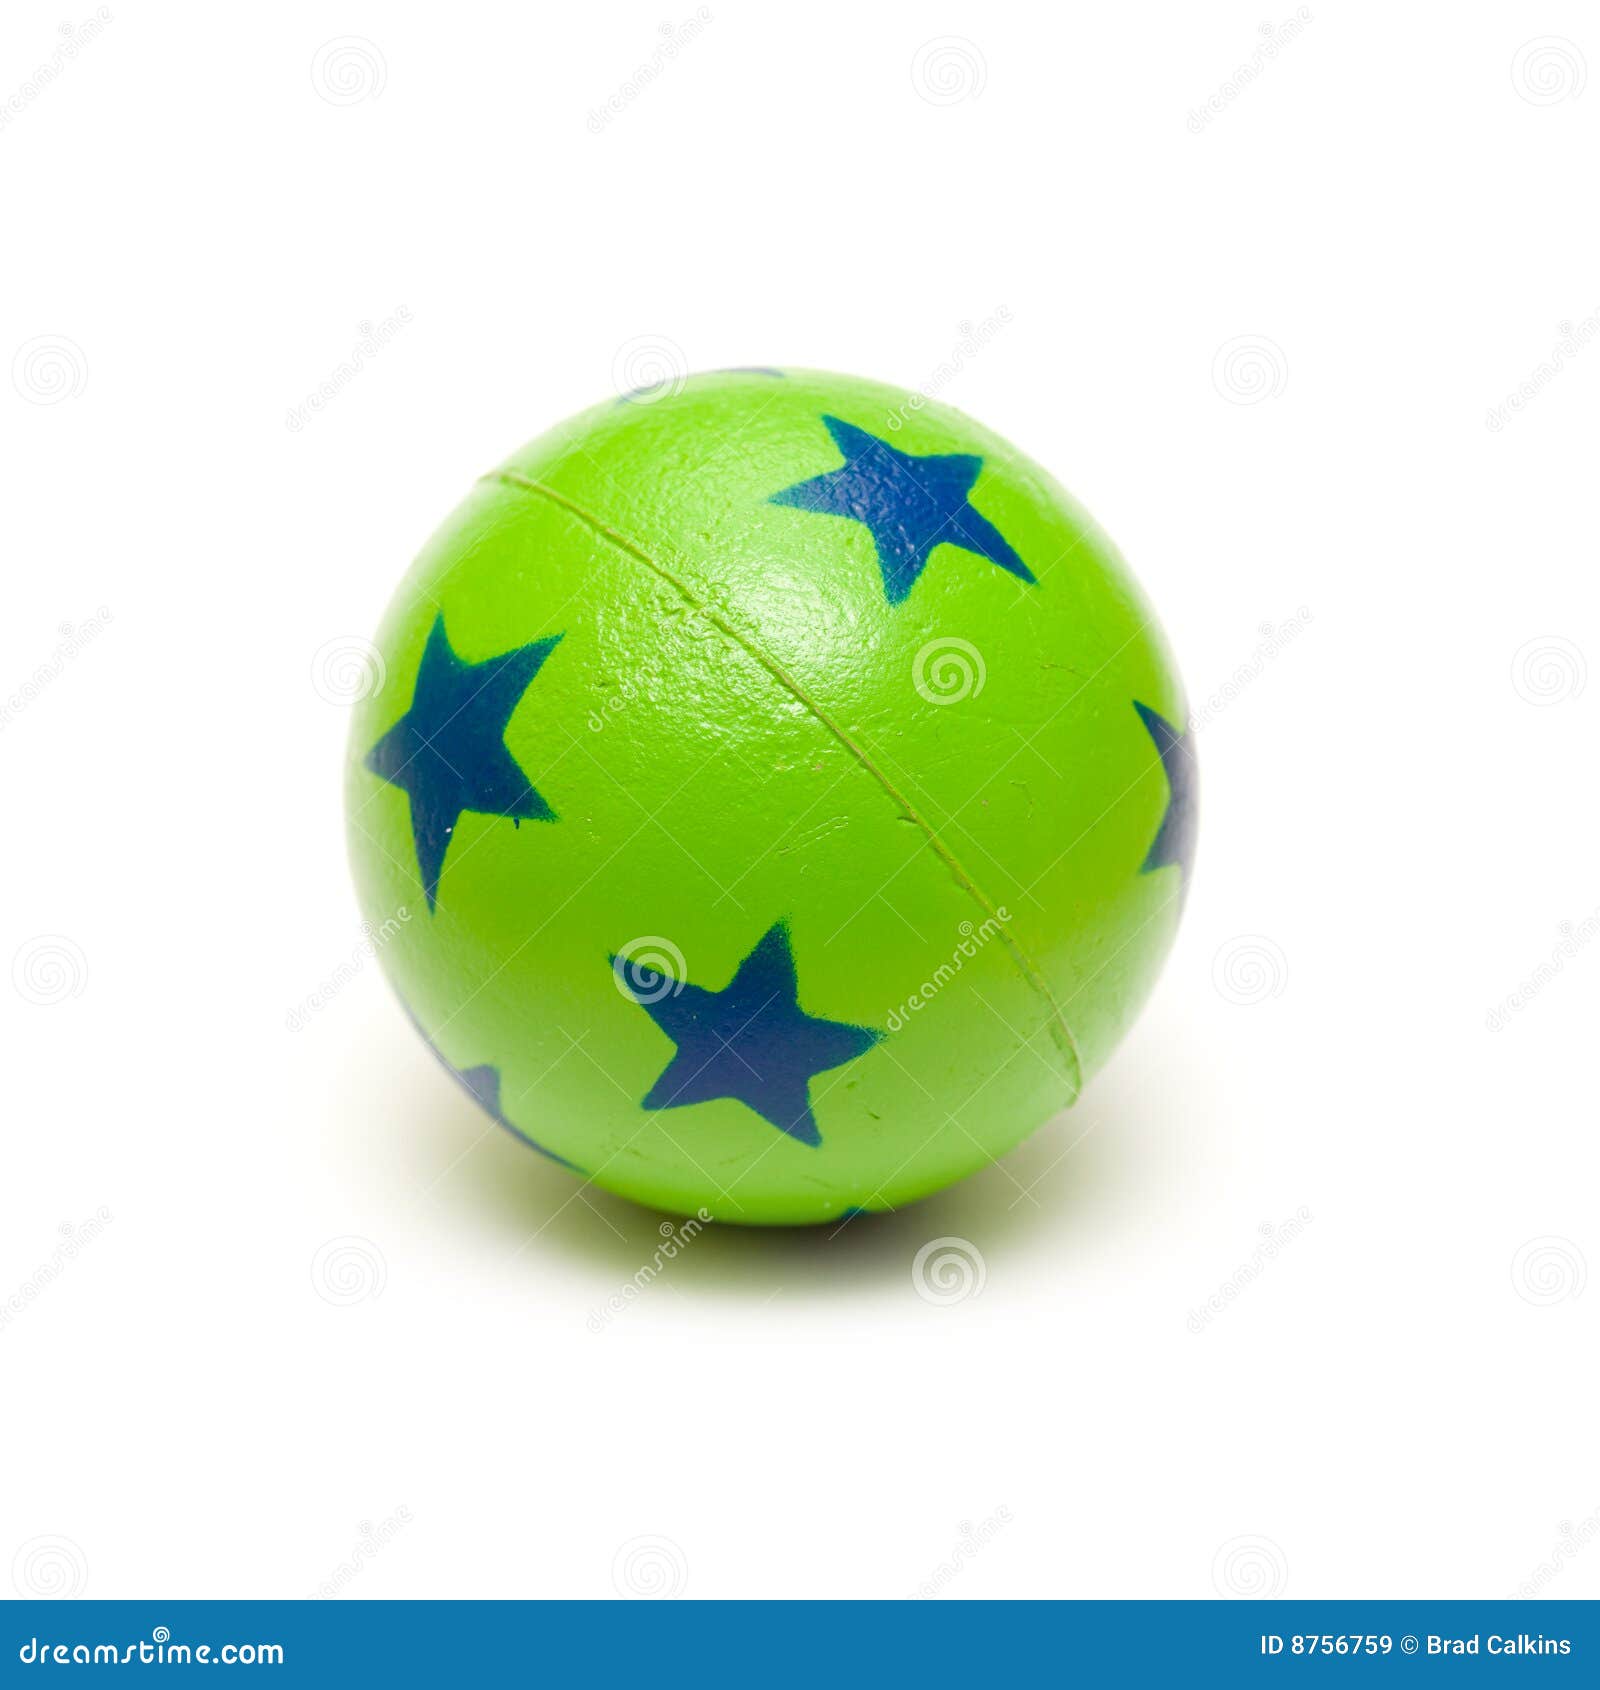 green ball clipart - photo #42